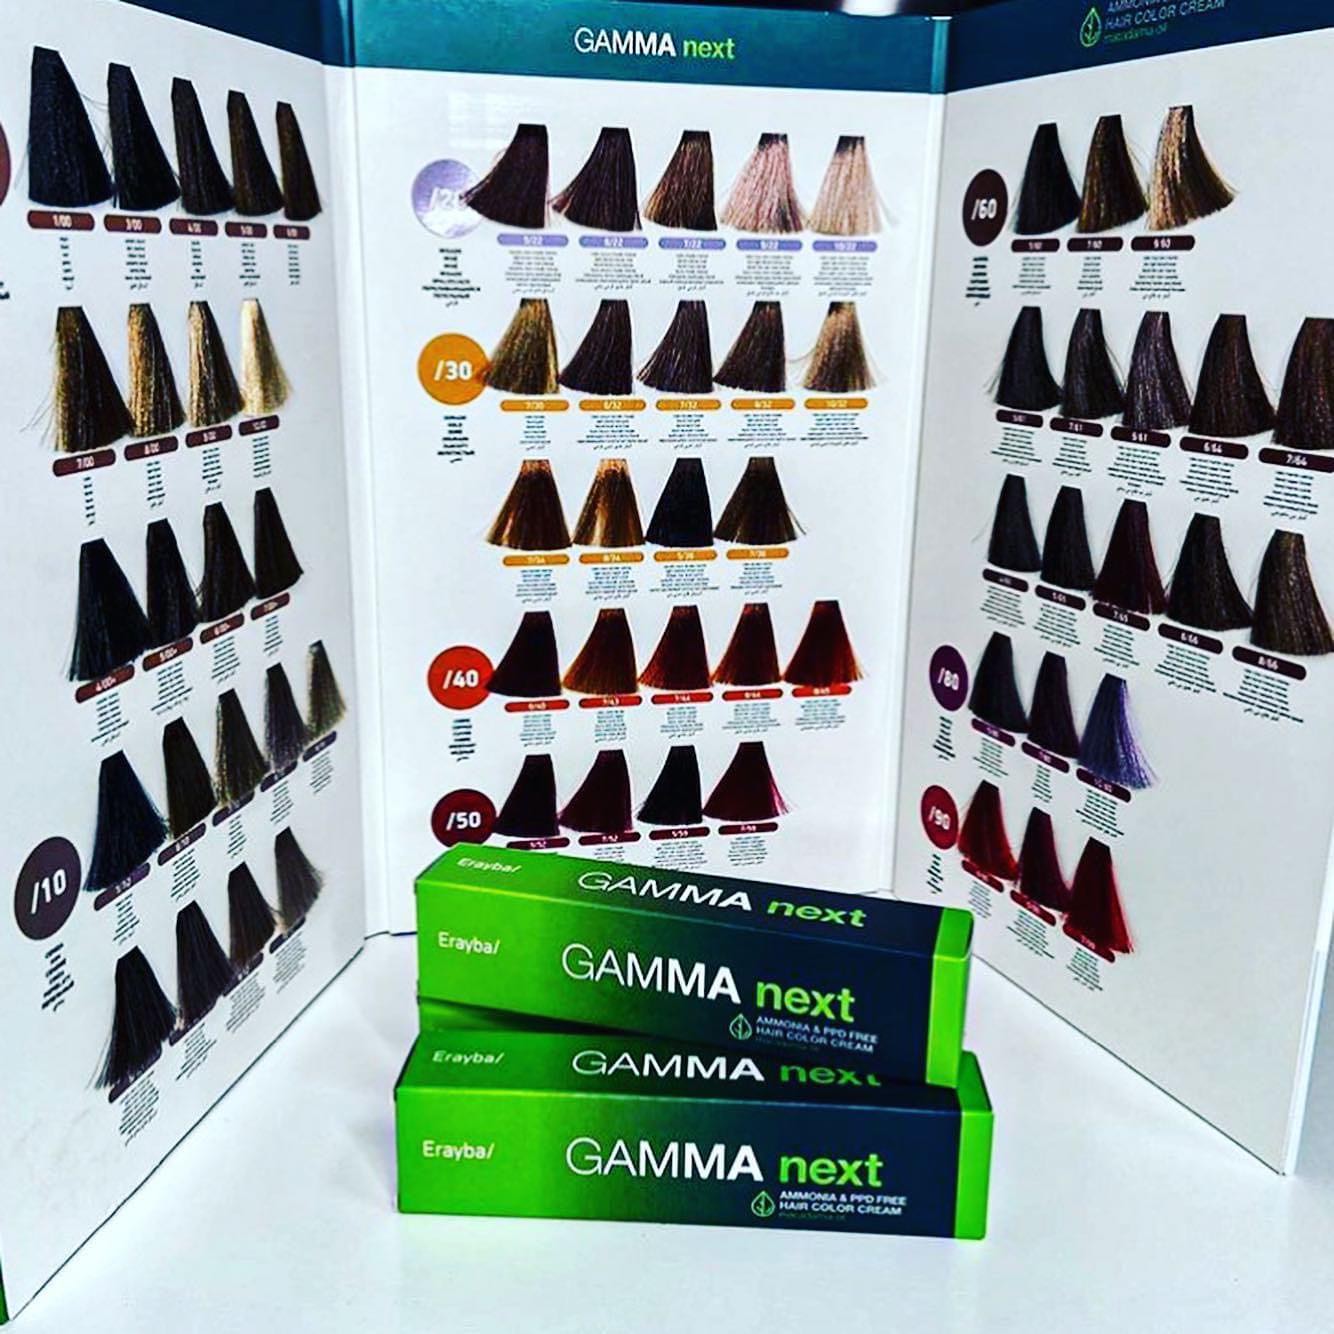 Gamma NEXT Ammonia & PPD Free Hair Color Cream - 10/32 Super Light Blond Irise Gold